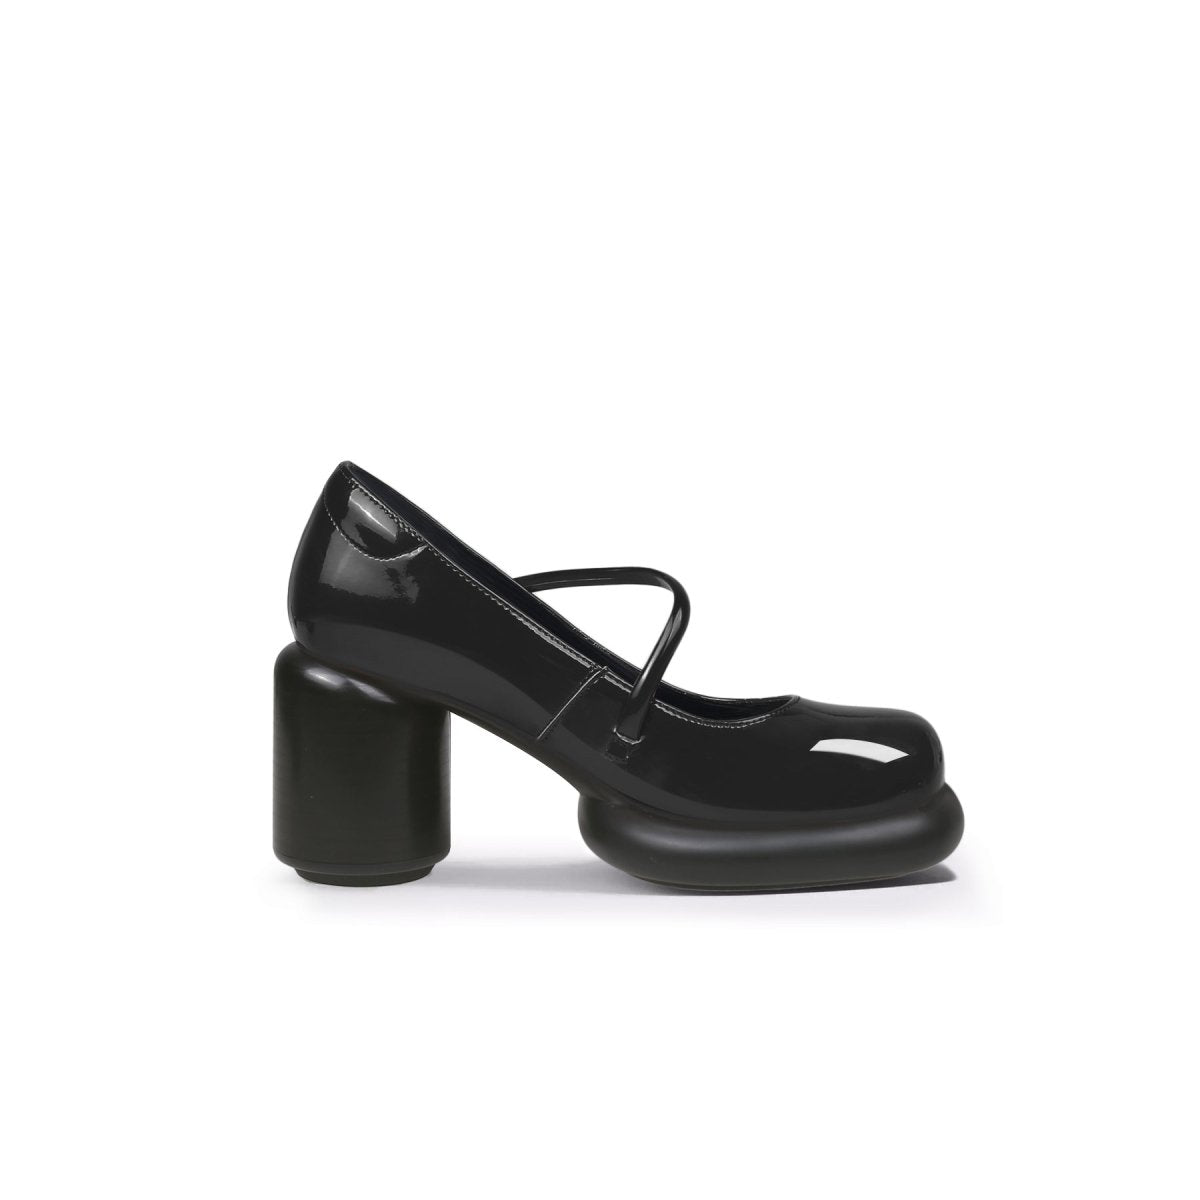 Branch Stool-heel Patent Black Mary Jane Pumps - 0cm